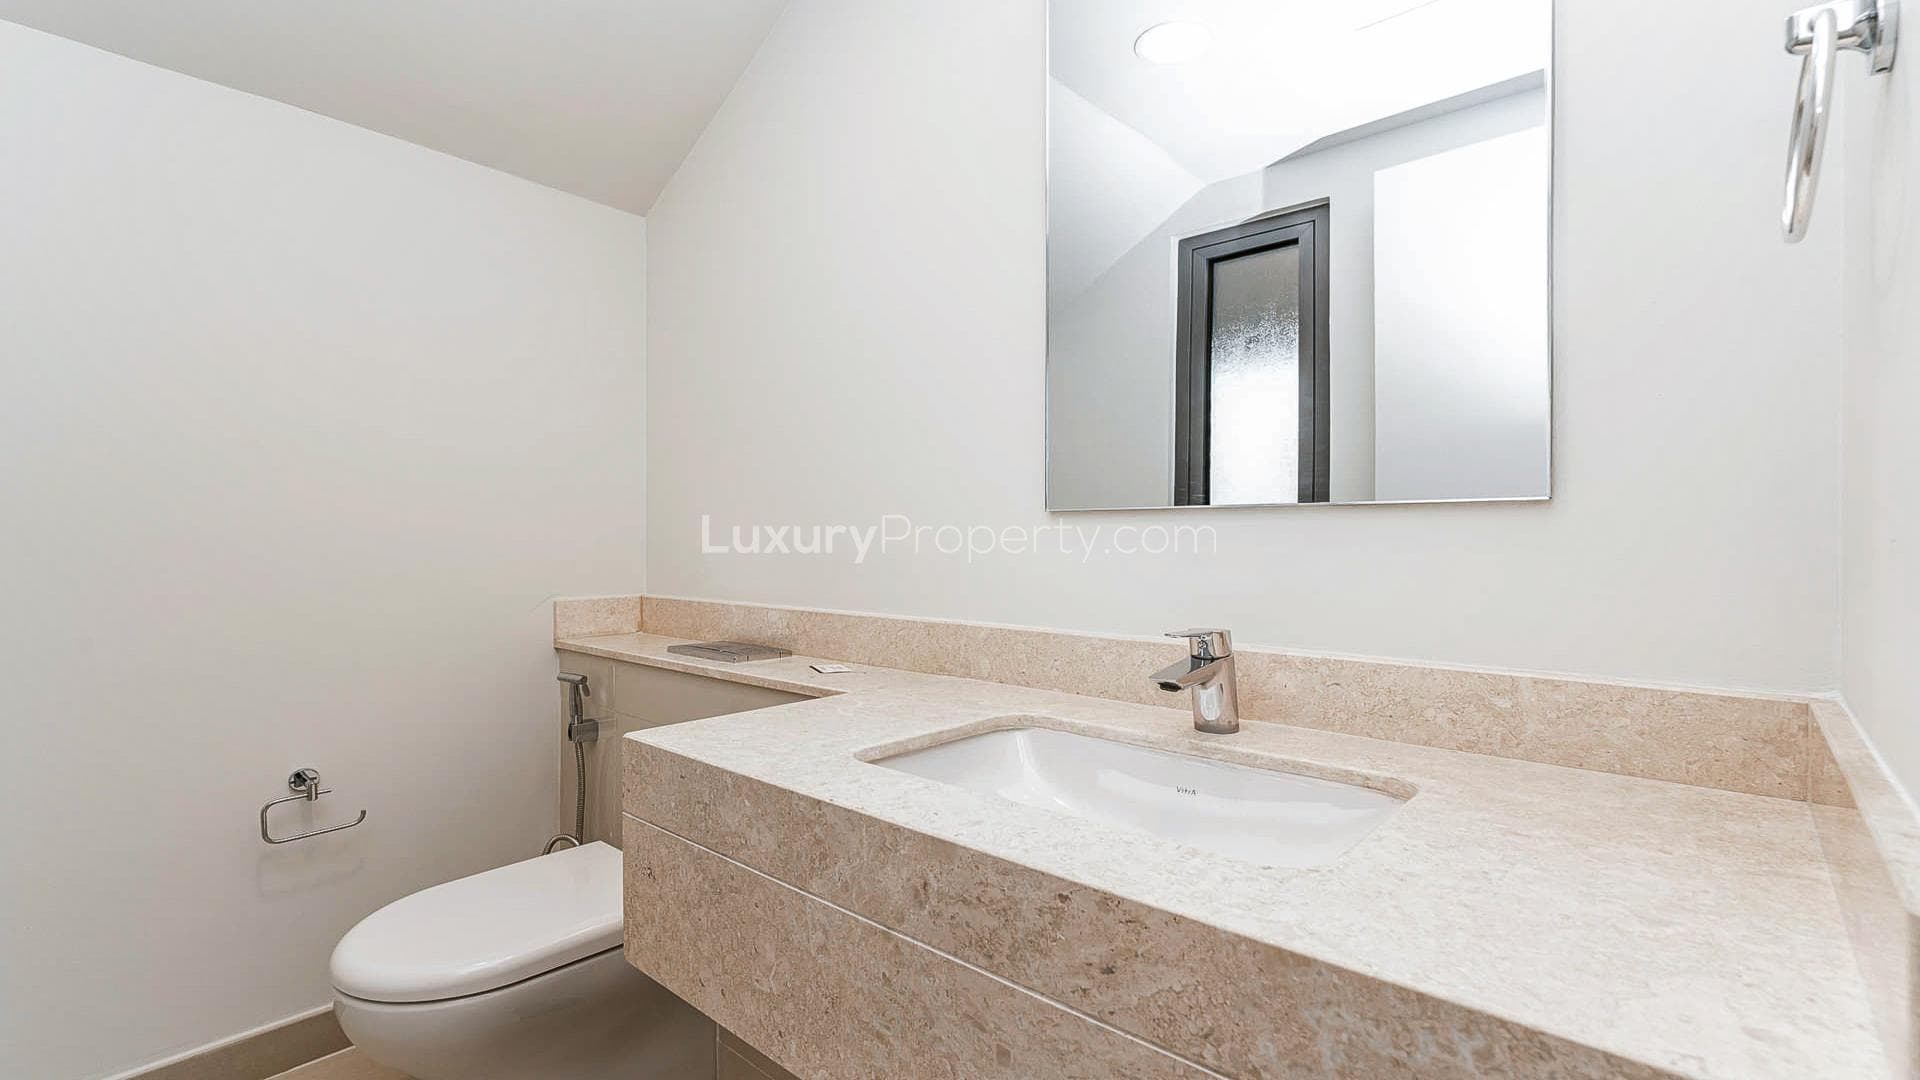 3 Bedroom Villa For Sale Maple At Dubai Hills Estate Lp18588 2630392538fbb600.jpg